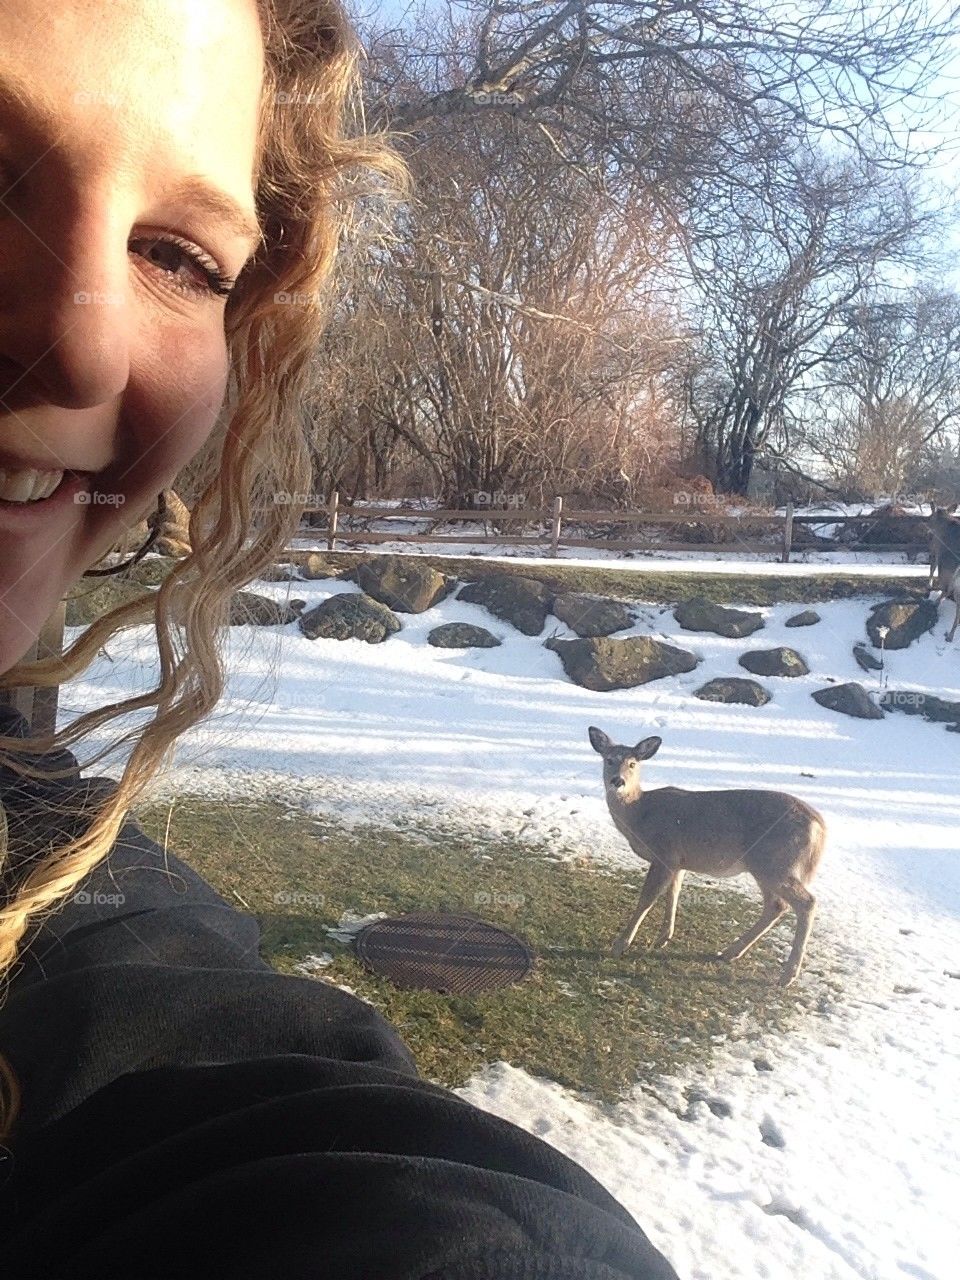 Selfie with a deer